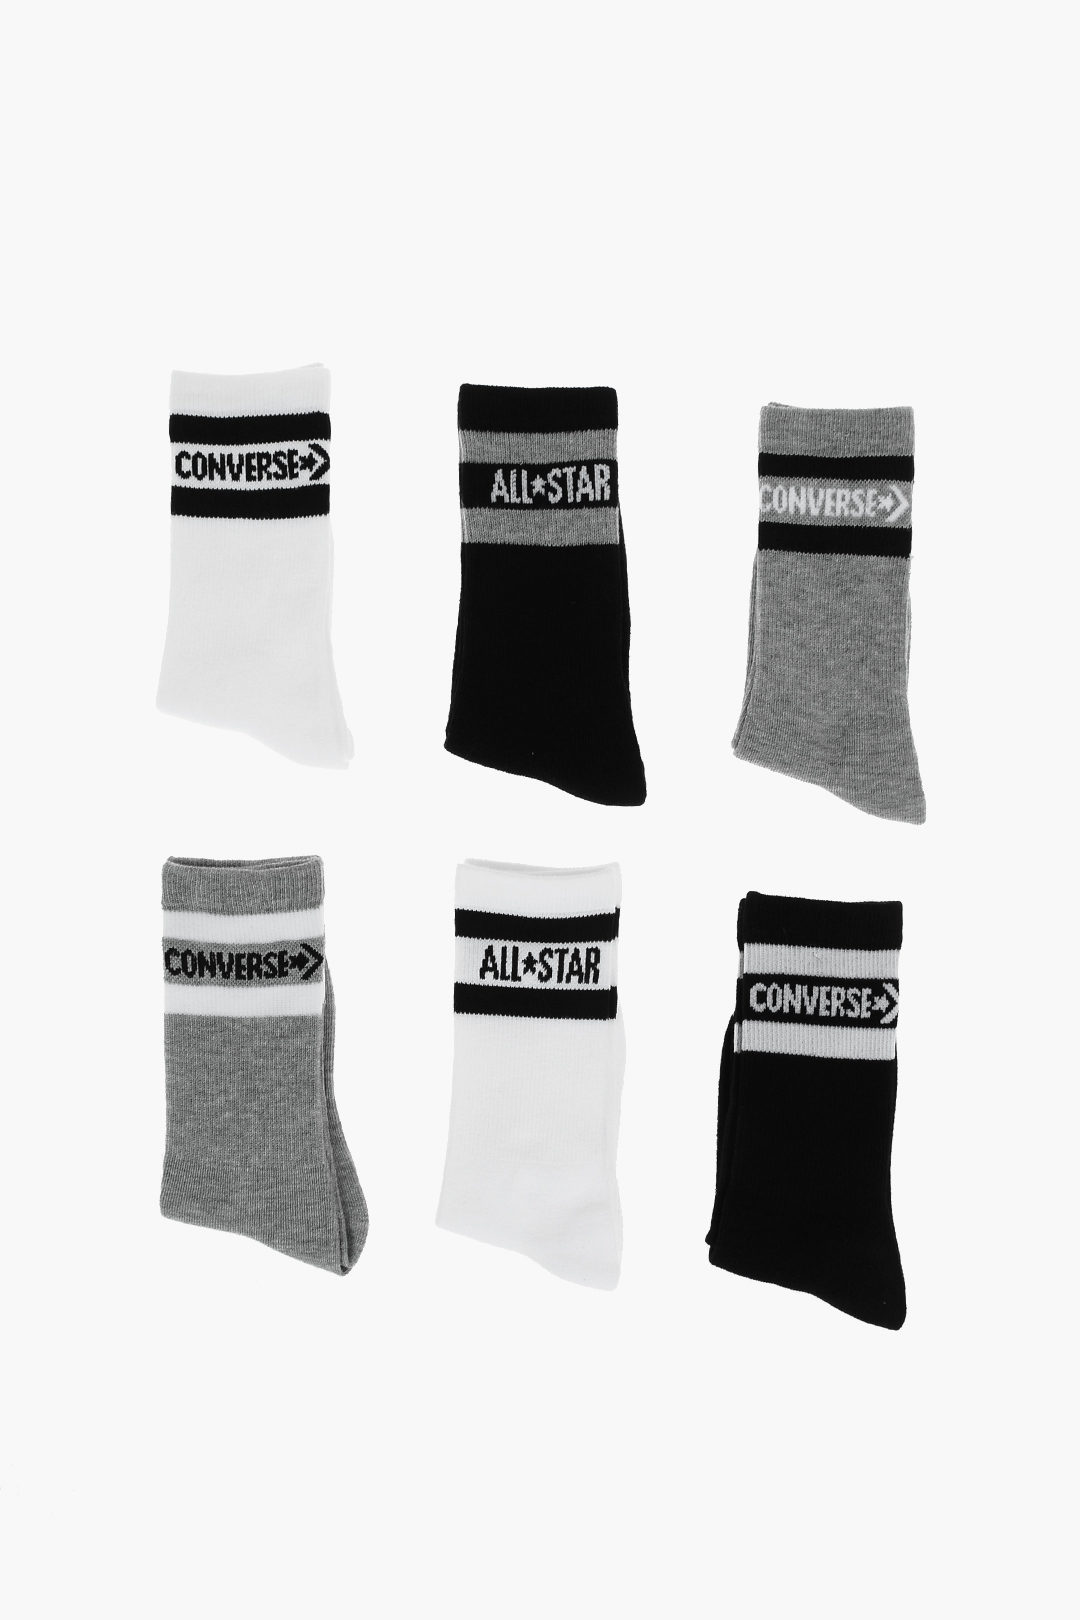 Converse KIDS Stretch Set 6 pairs of Socks unisex children boys girls -  Glamood Outlet